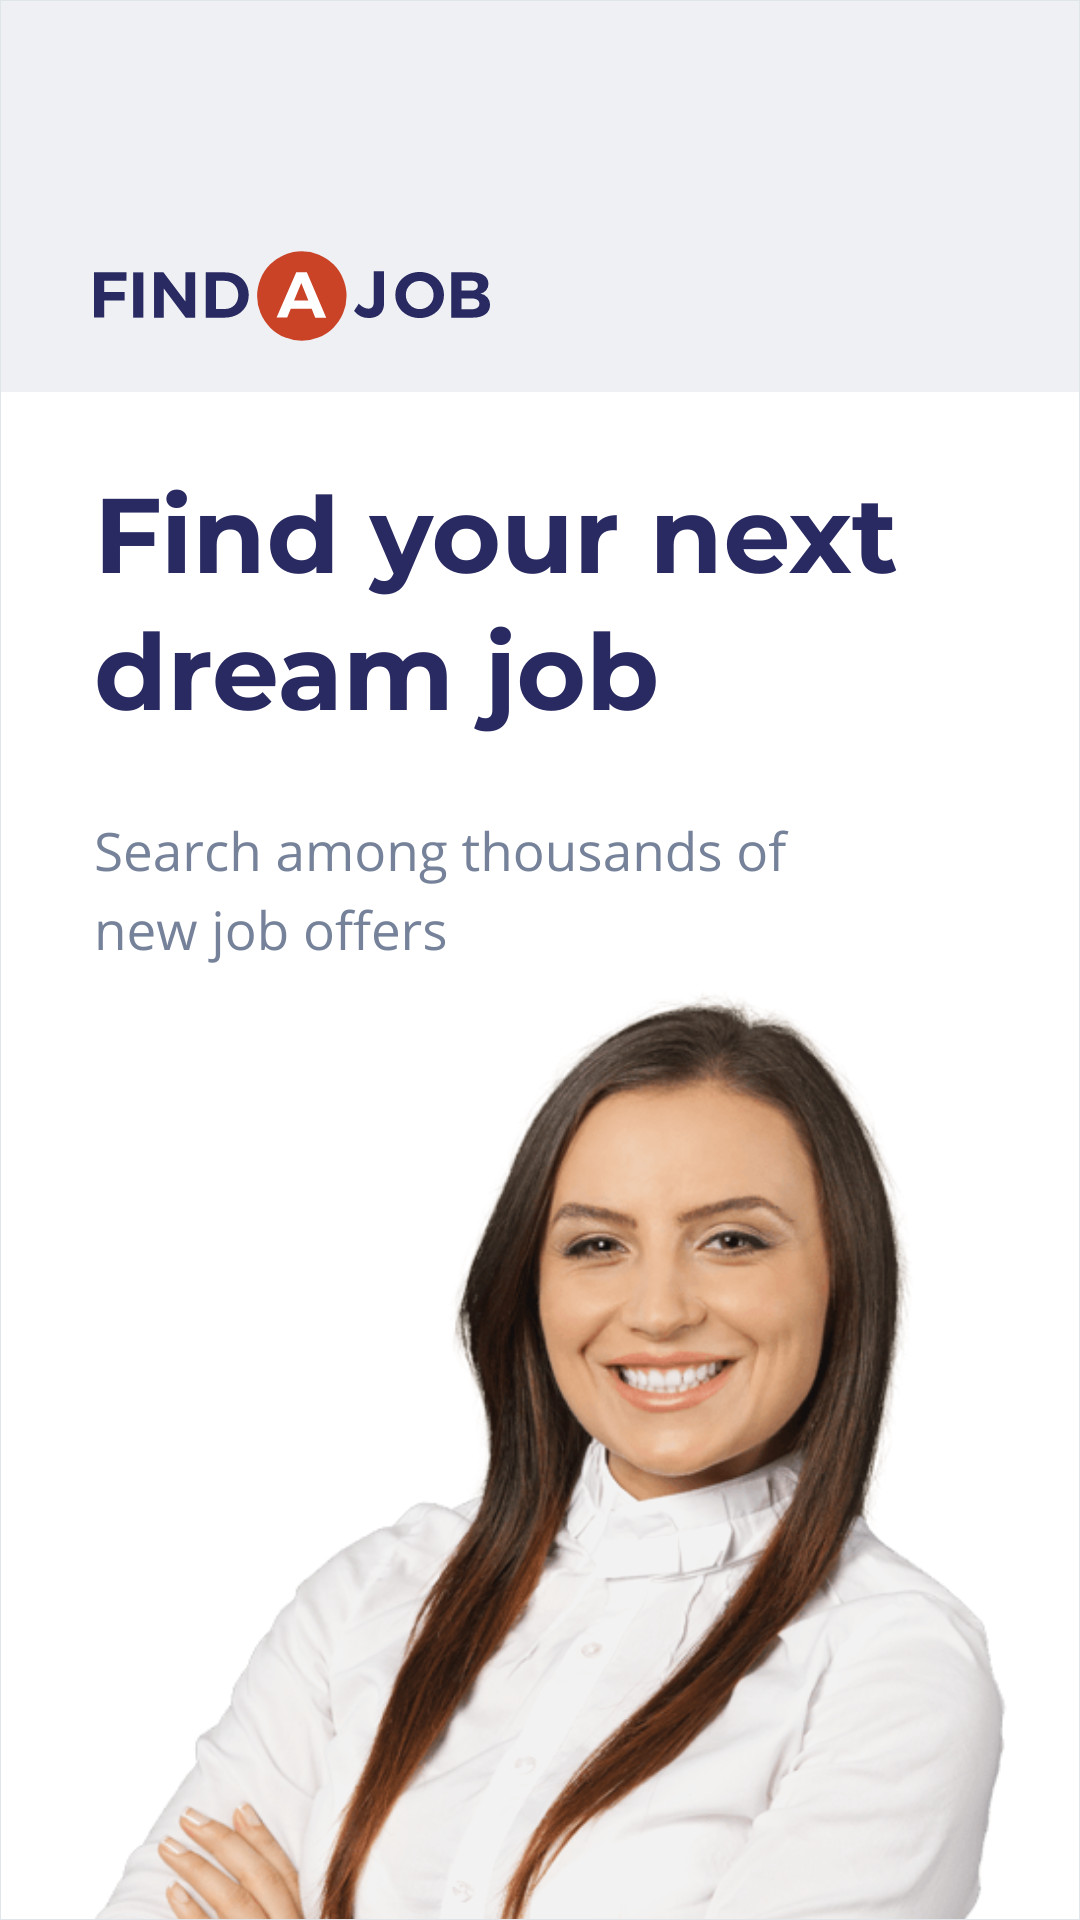 Find Your Next Dream Job